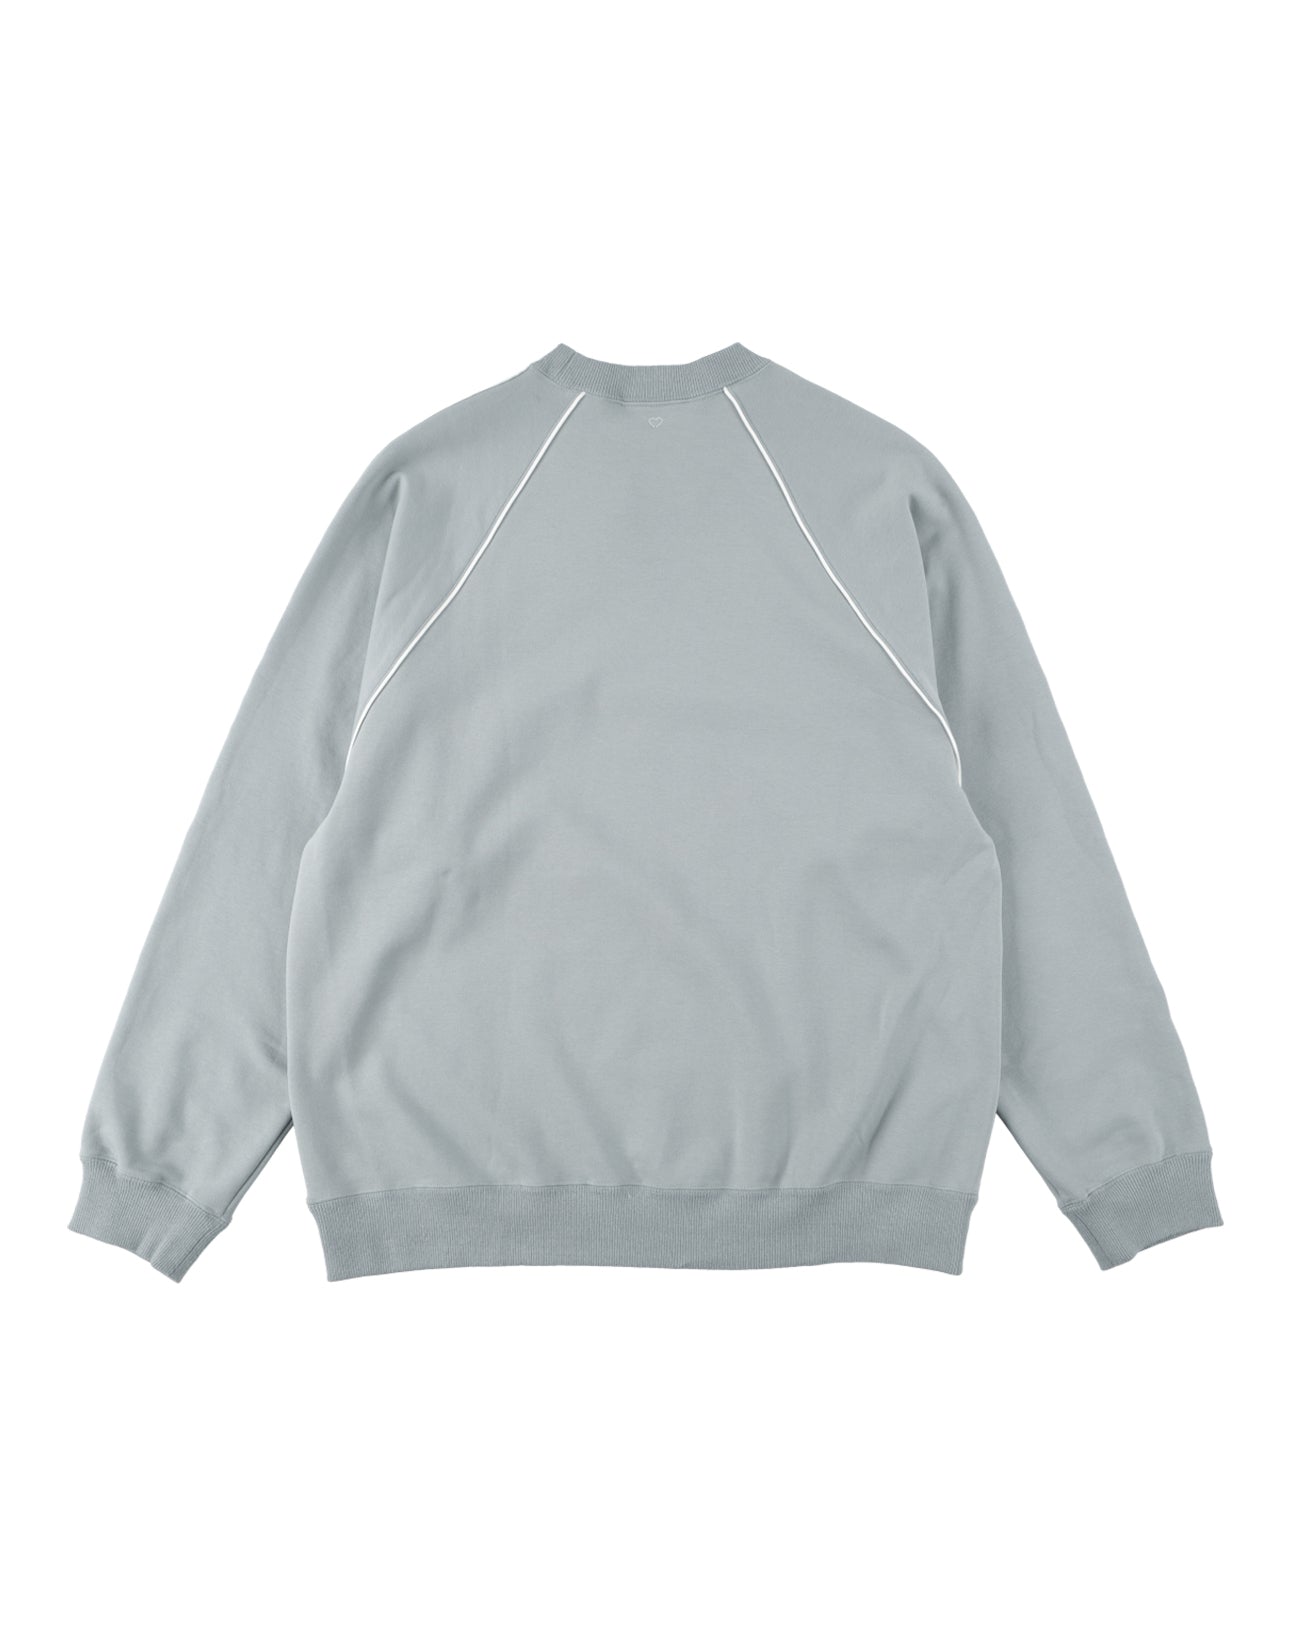 x UMBRO Track Sweat Shirt - light gray - FAB4 ONLINE STORE